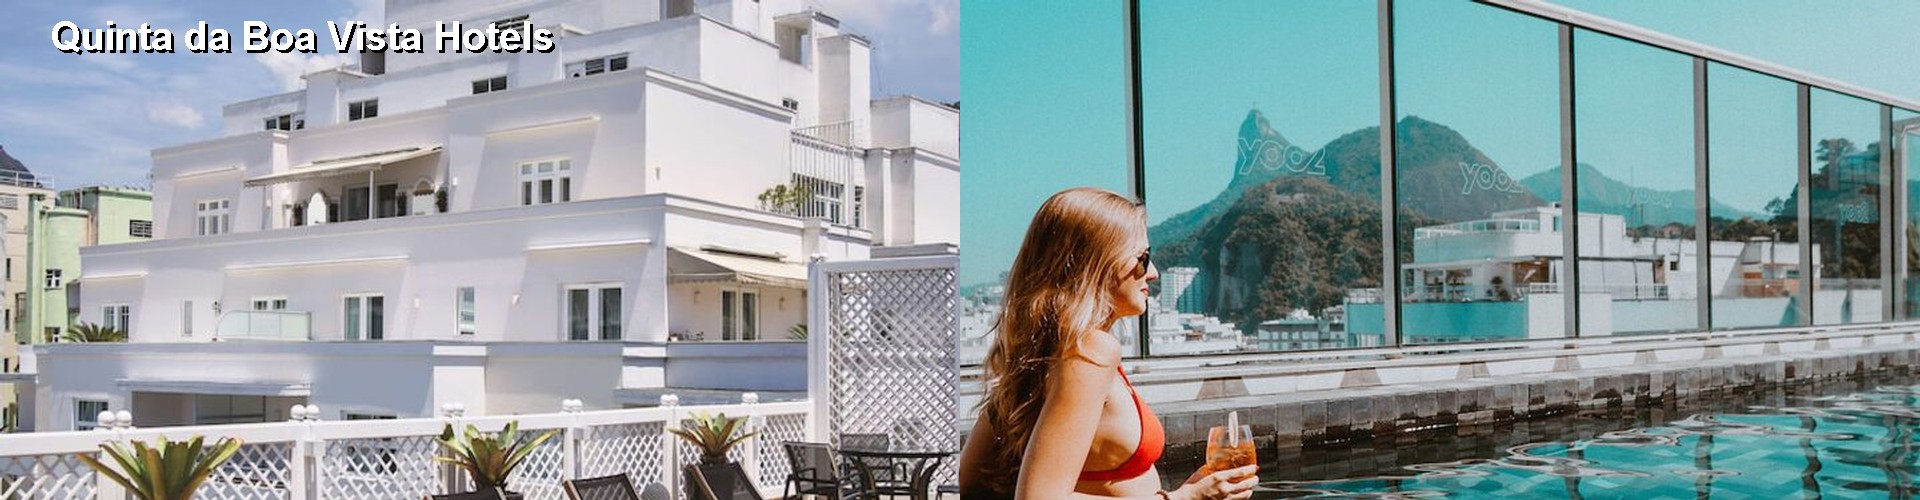 5 Best Hotels near Quinta da Boa Vista